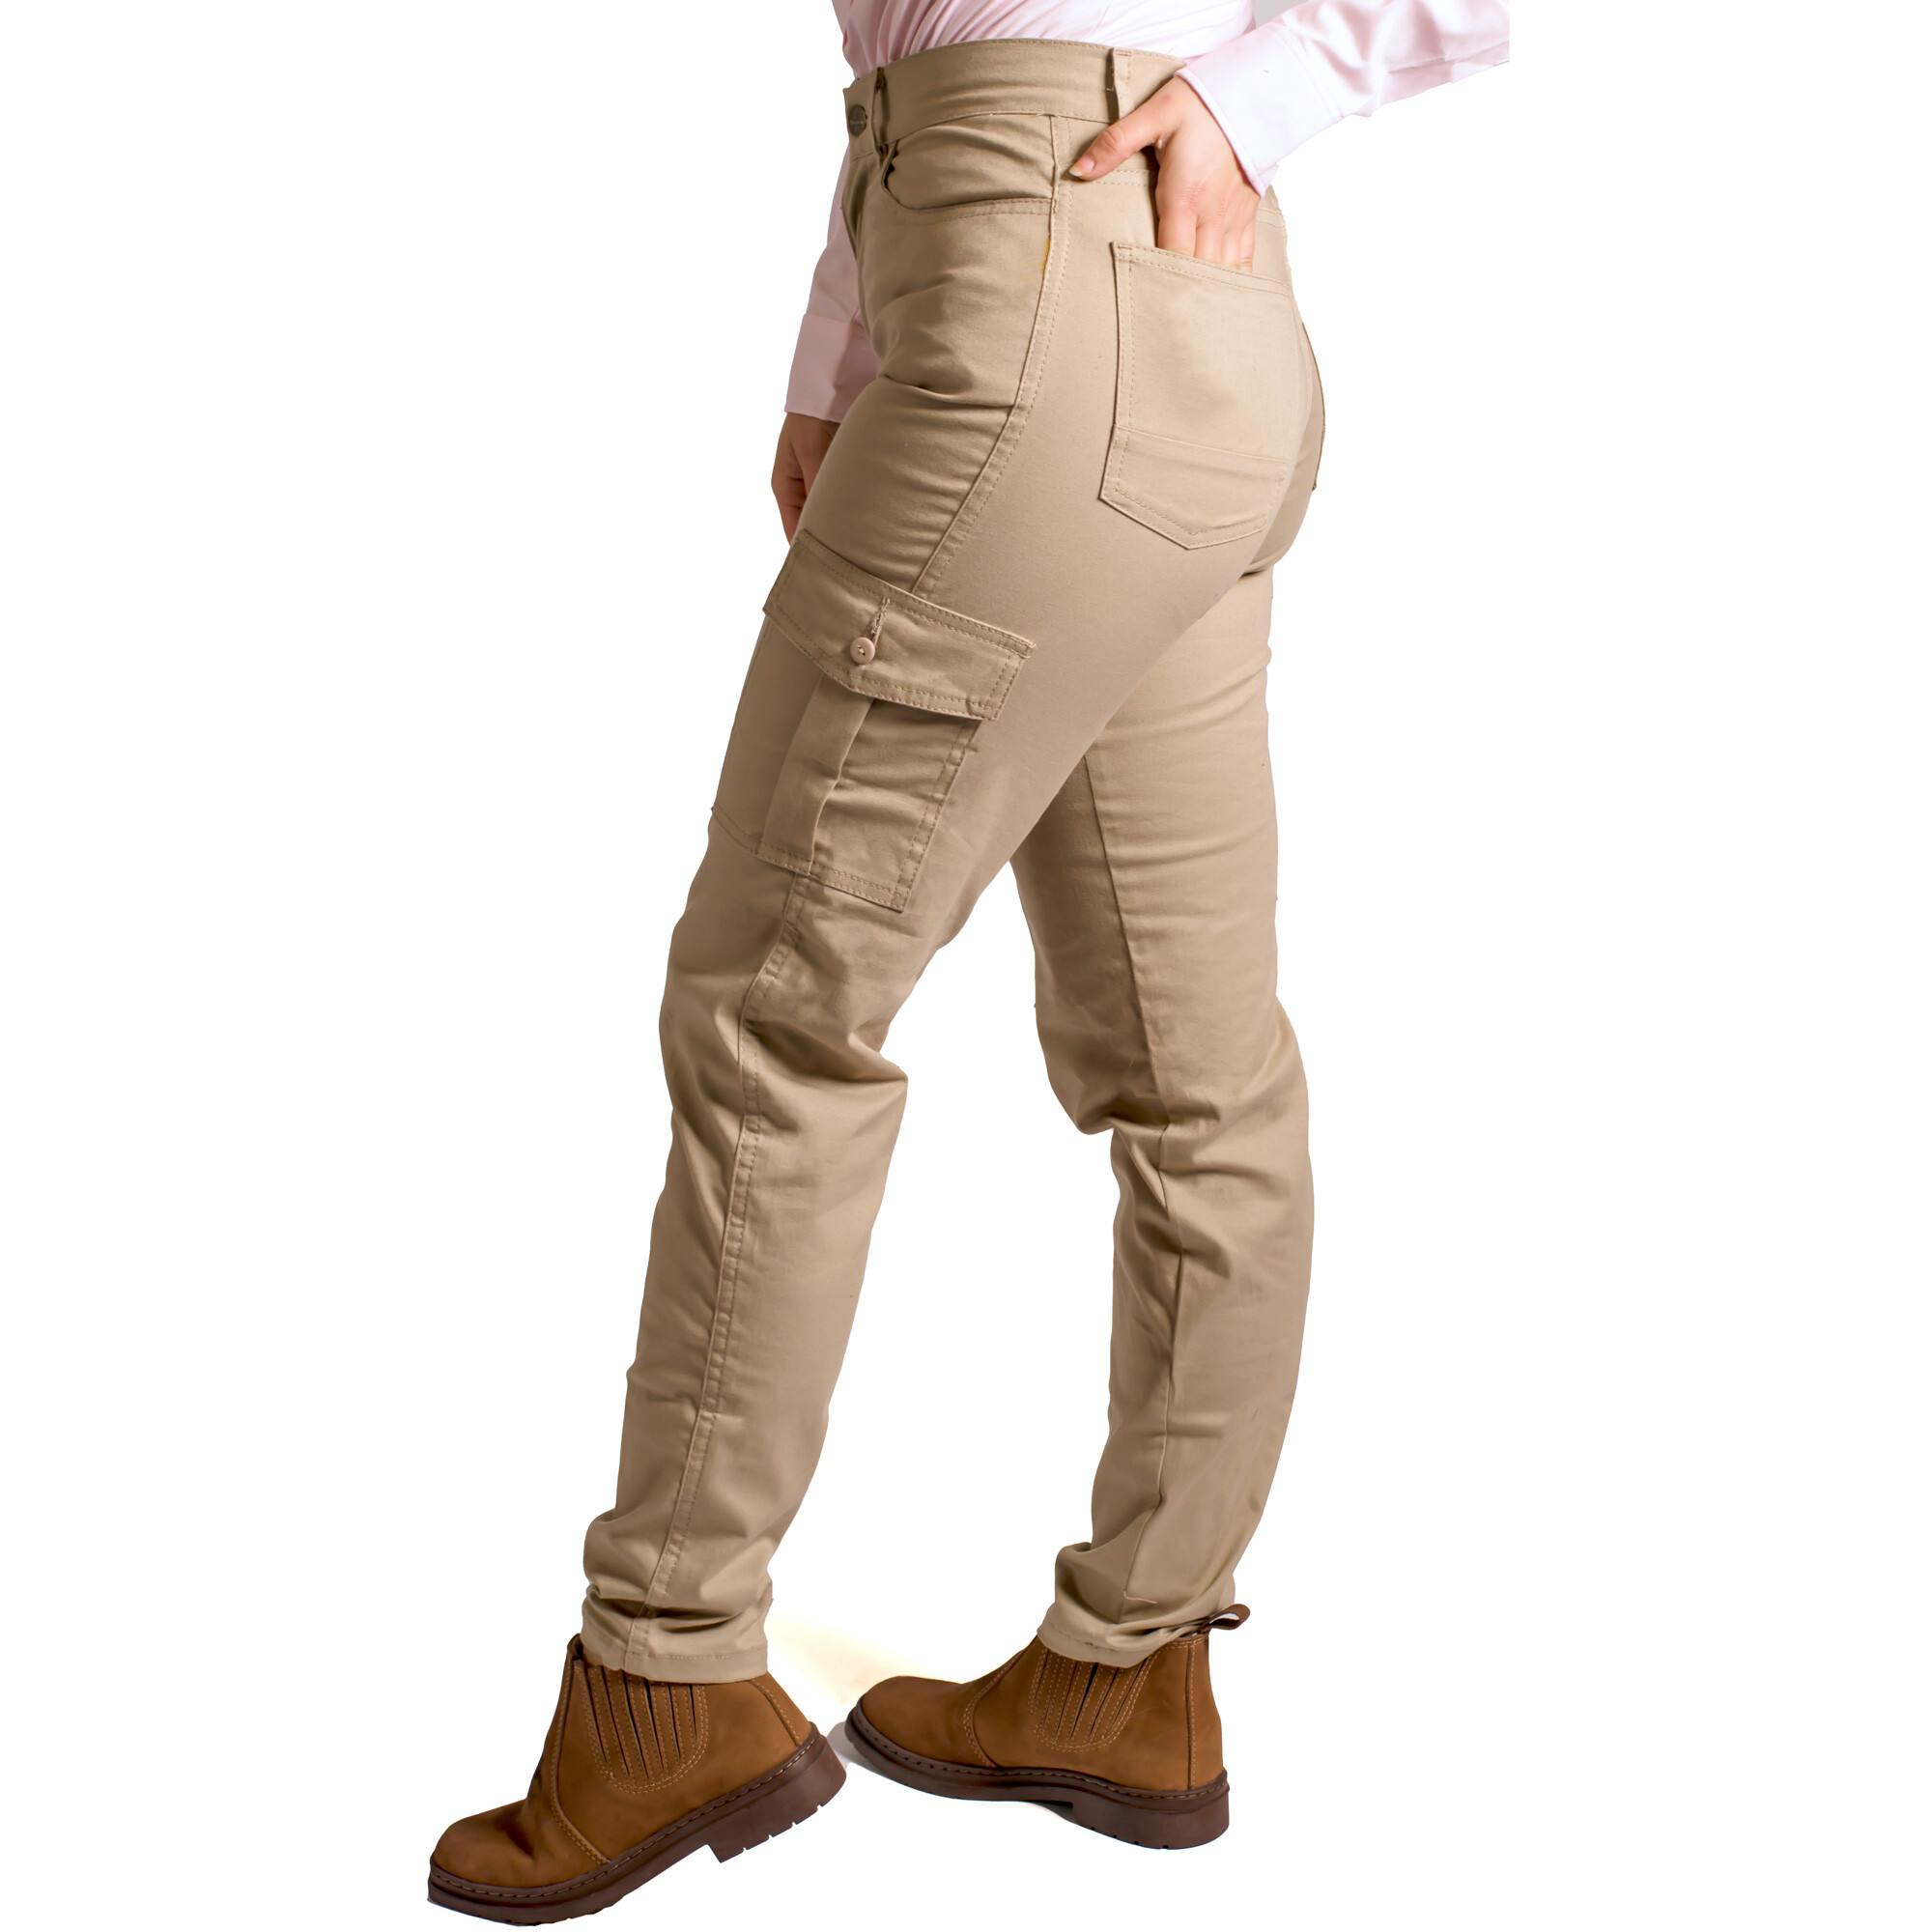 Beige straight cargo pants - XS-34  Ropa online mujer, Pantalones mujer,  Pantalones